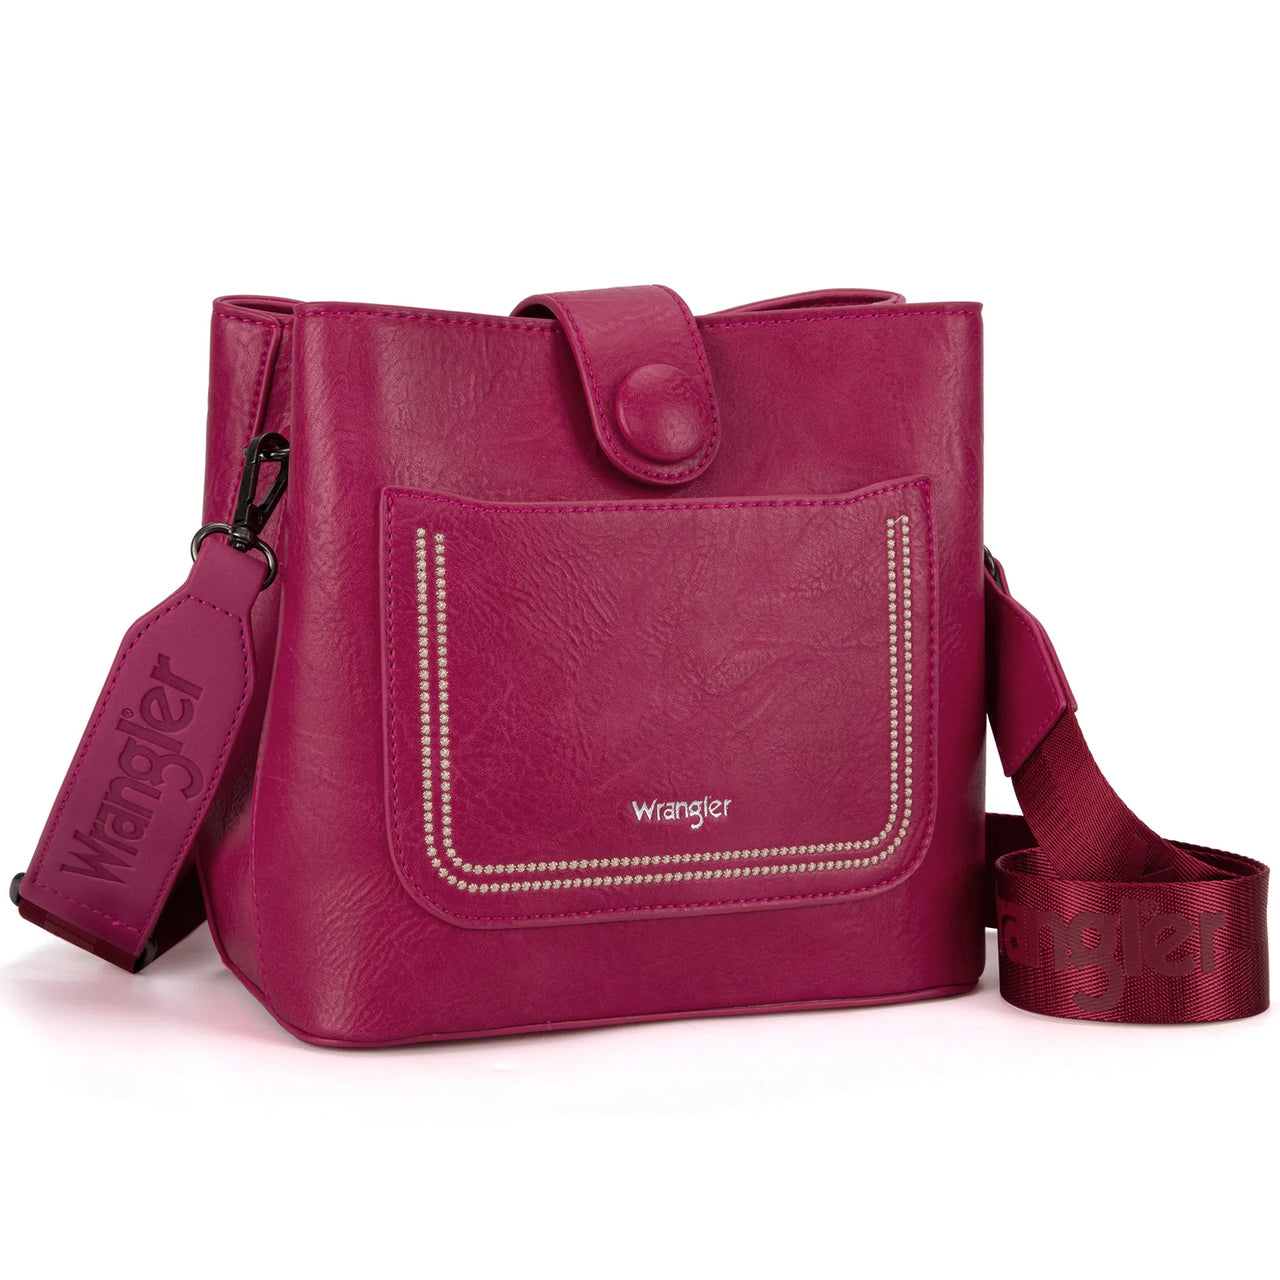 Wrangler Women's Hobo Crossbody/Shoulder Bag - Hot Pink